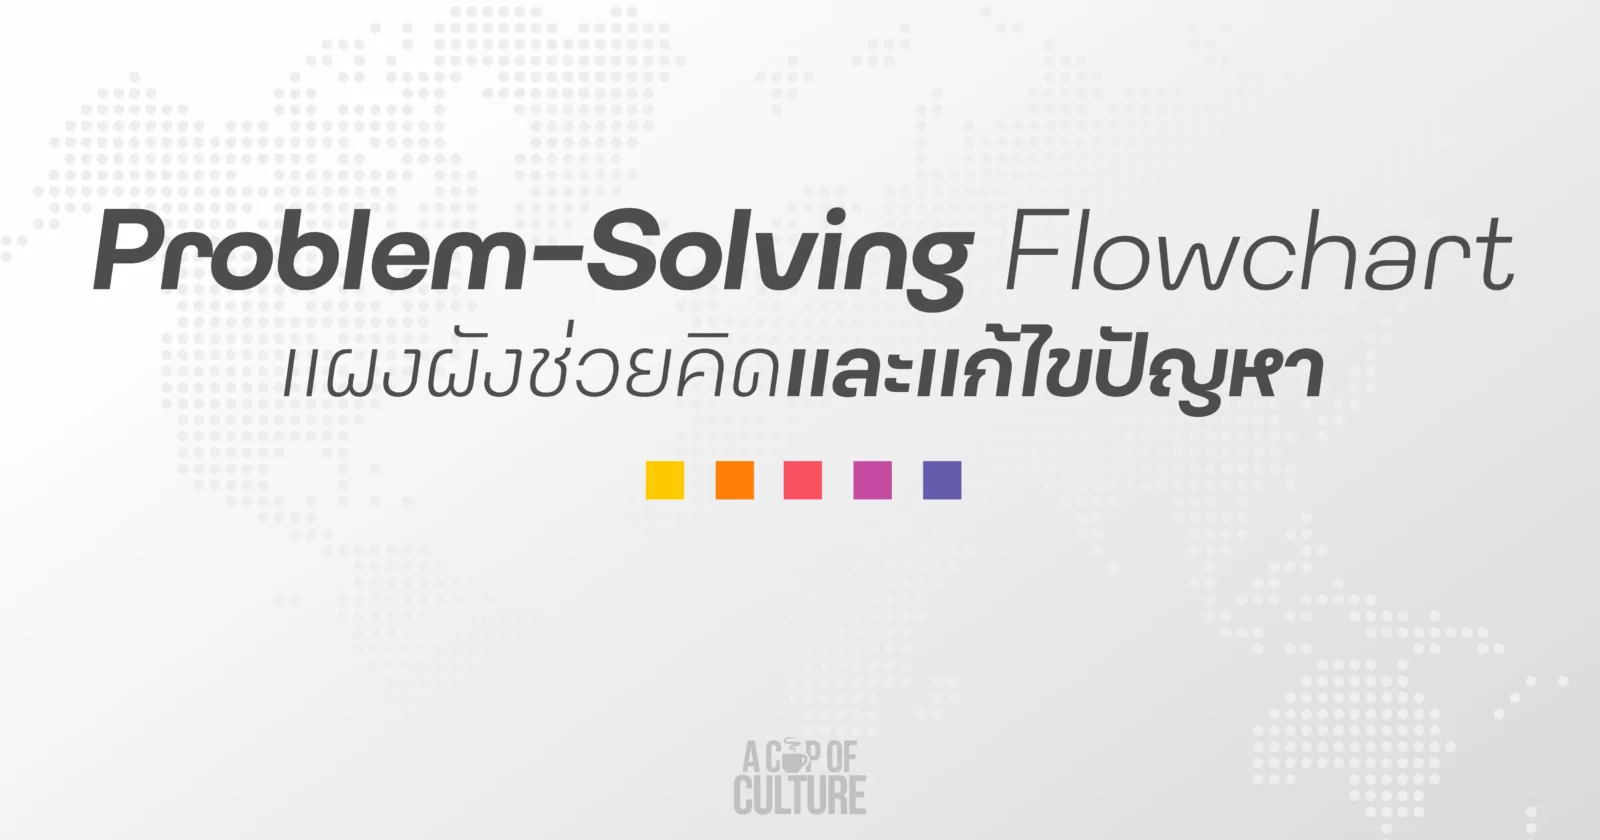 Problem-Solving Flowchart: แผงผังช่วยคิดและแก้ไขปัญหา - Brightside People